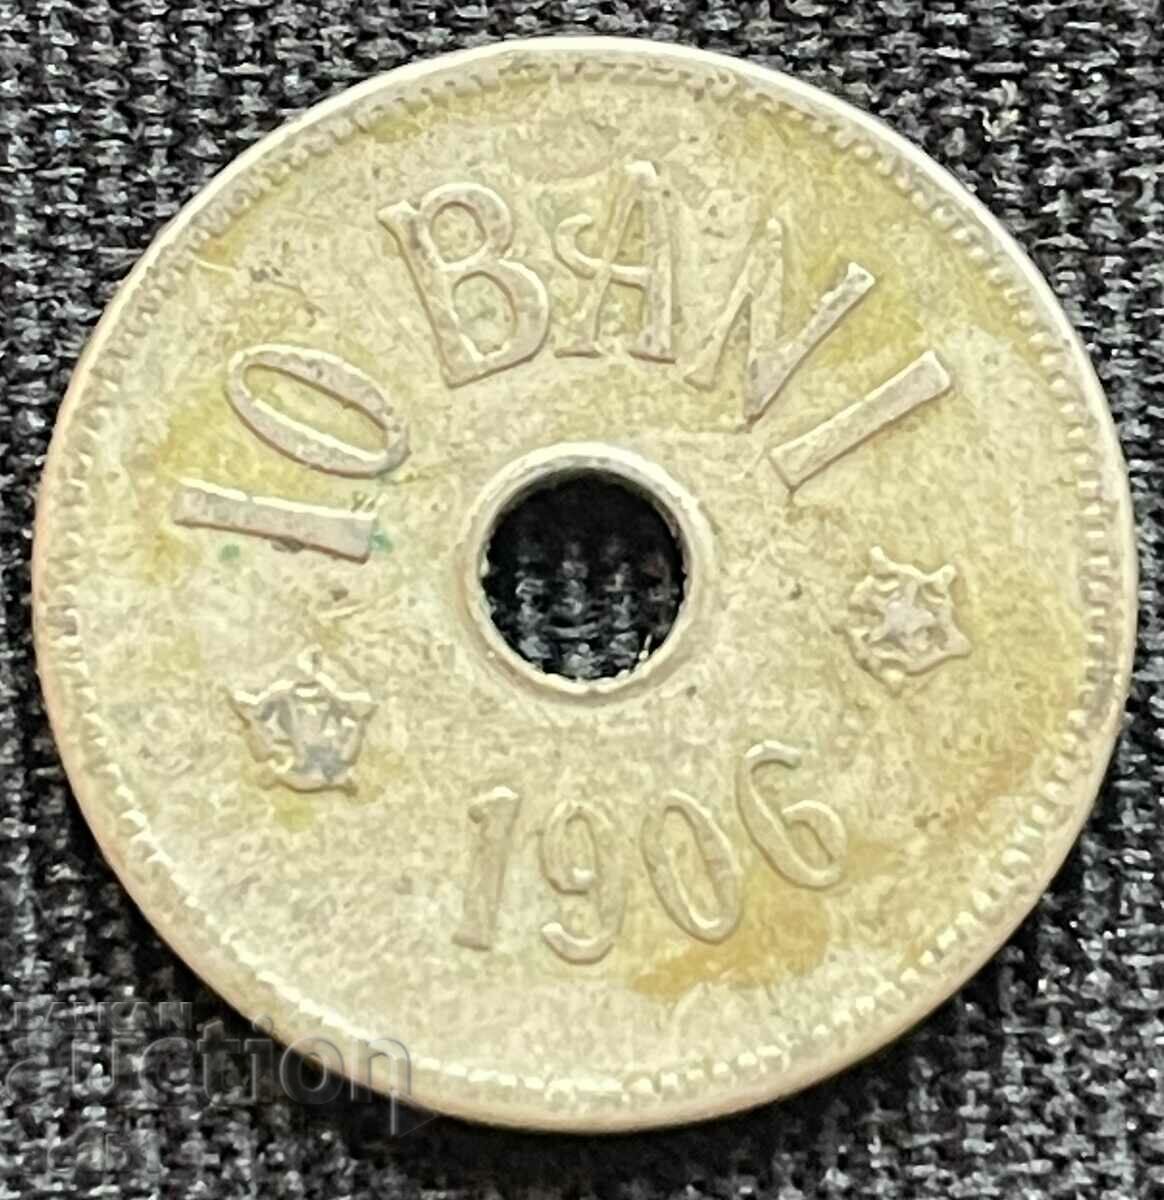 Romania 10 Bani 1906